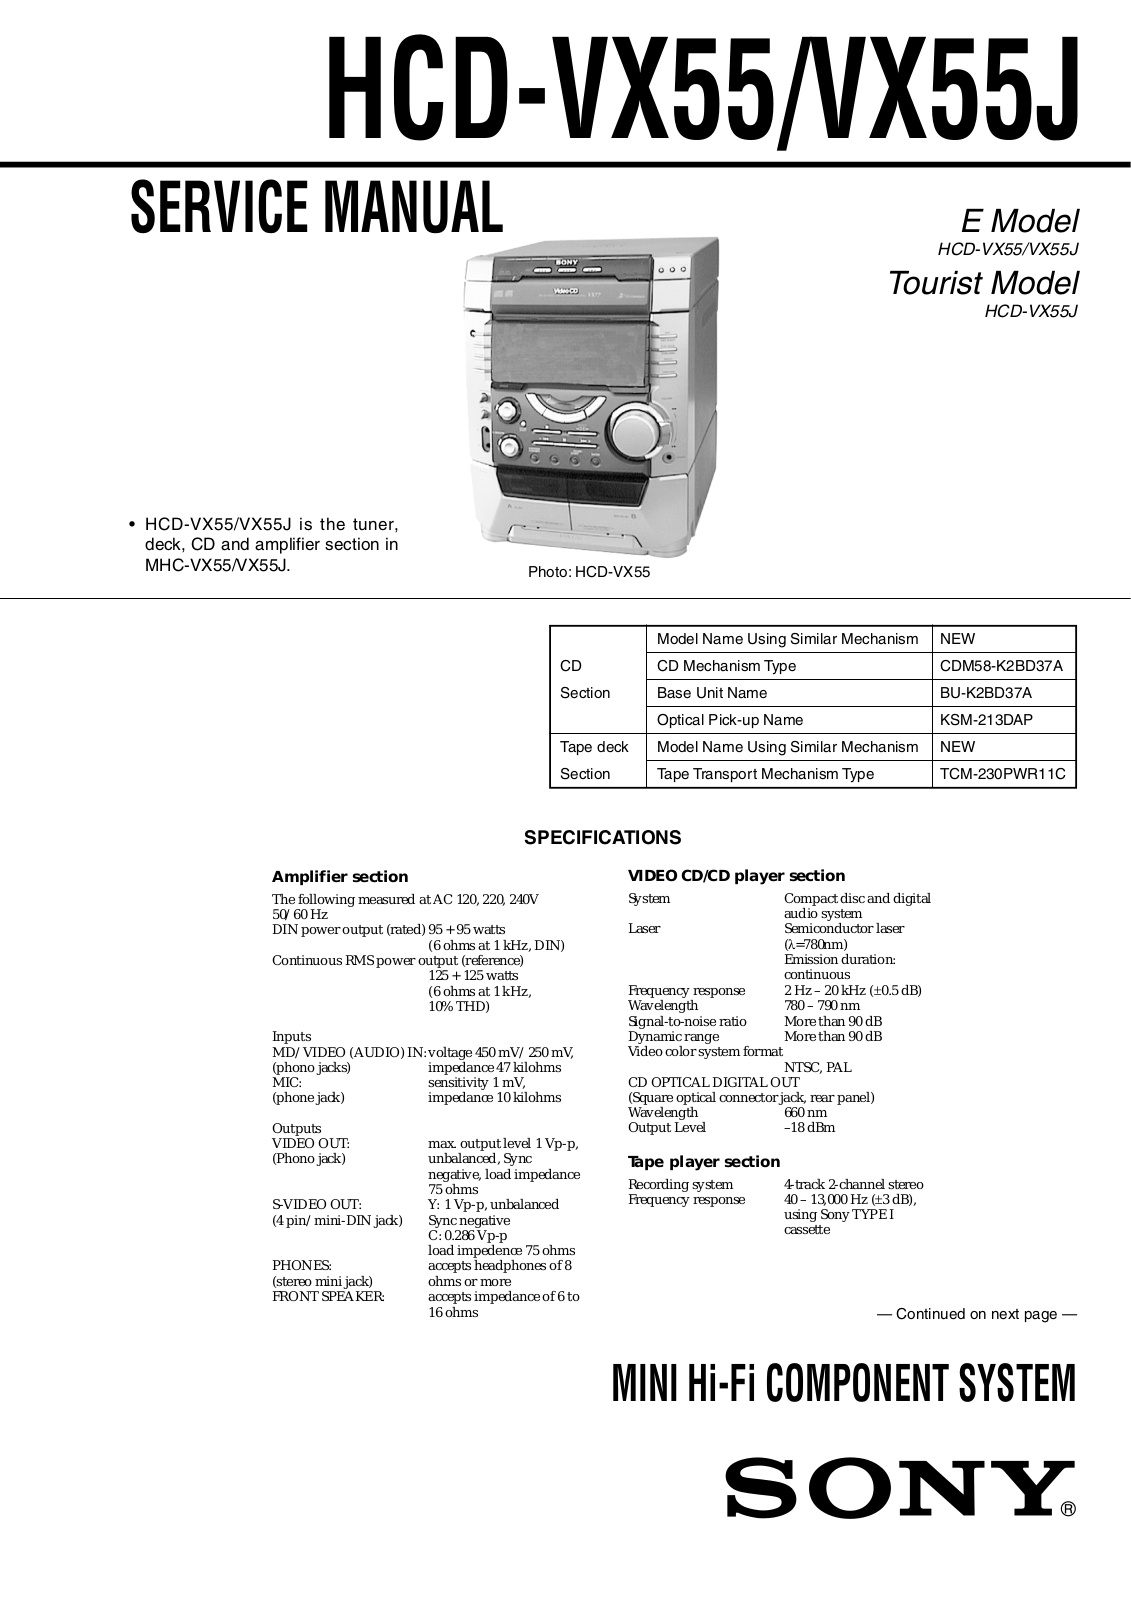 Sony HCD-VX55, HCD-VX55J Service manual